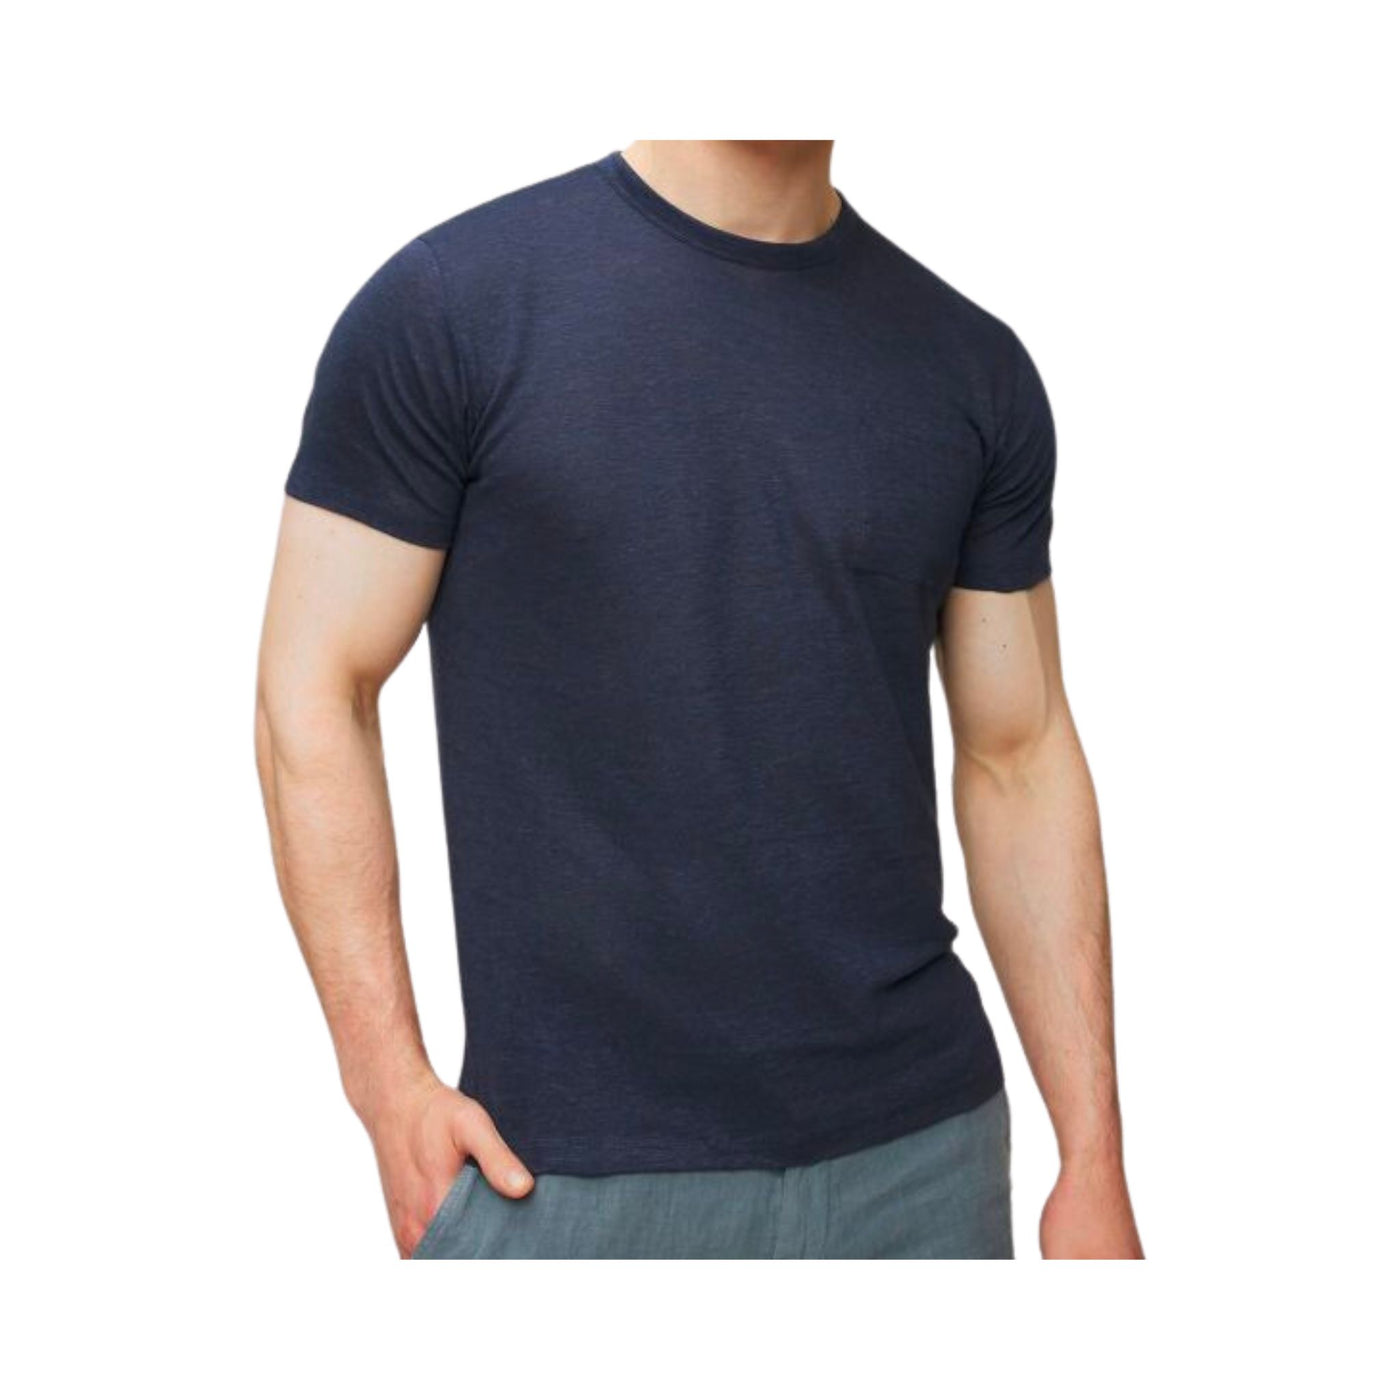 Men's crew neck T-shirt with pocket